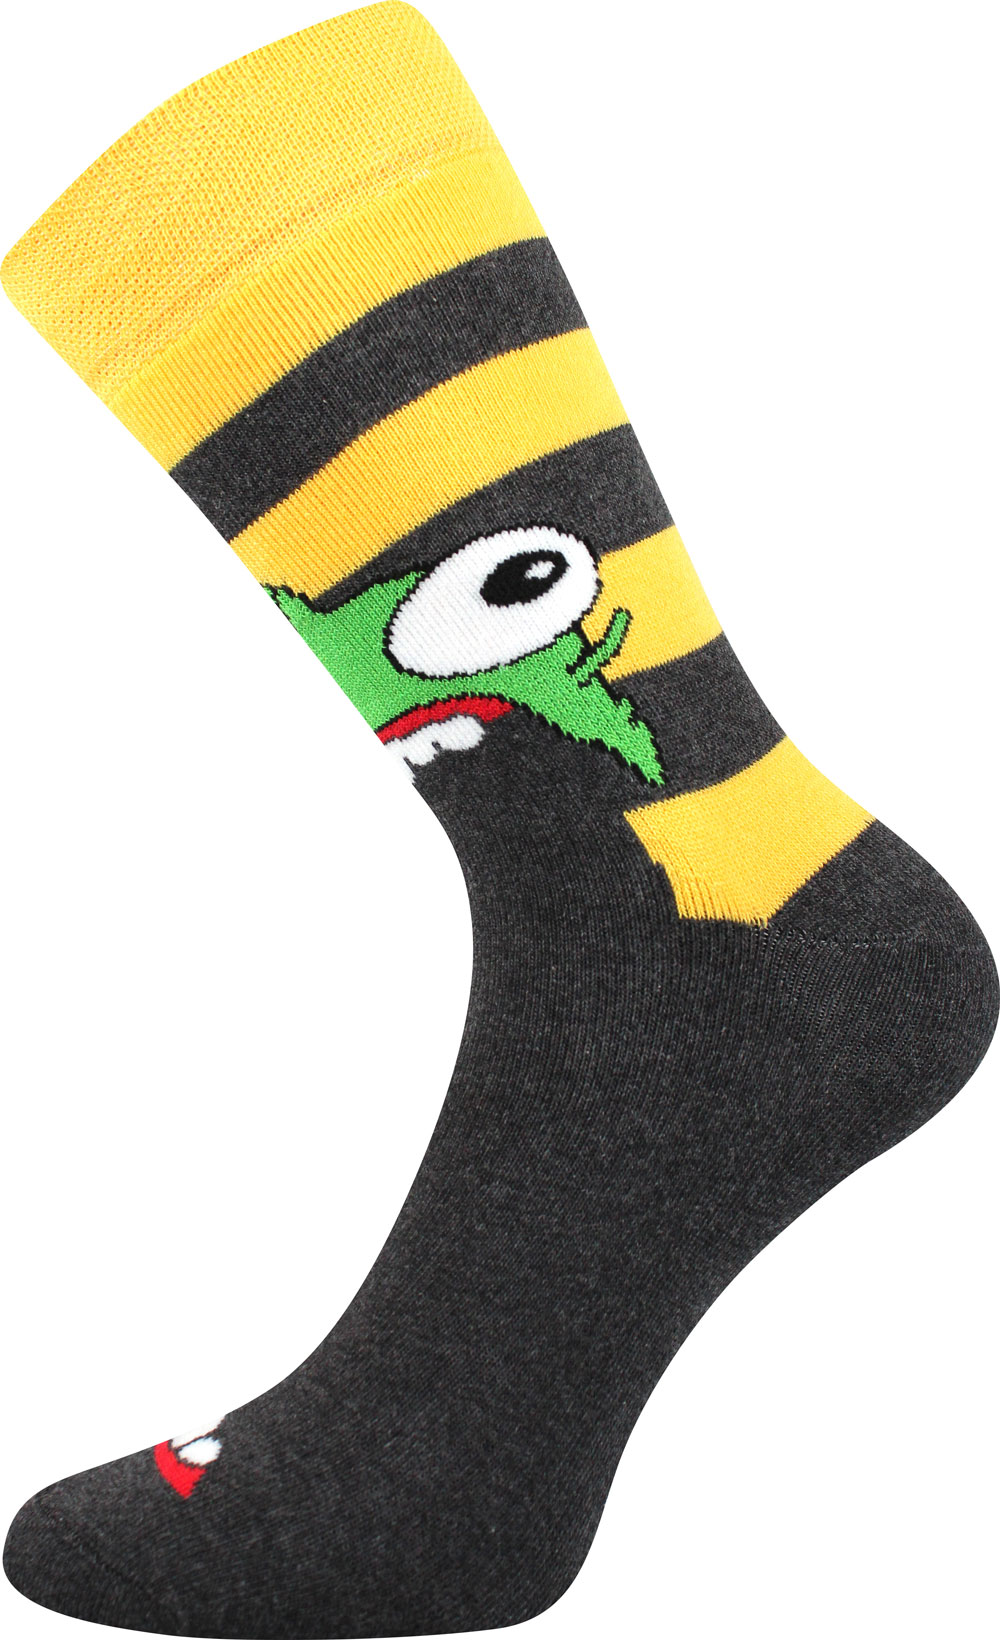 Kids' socks